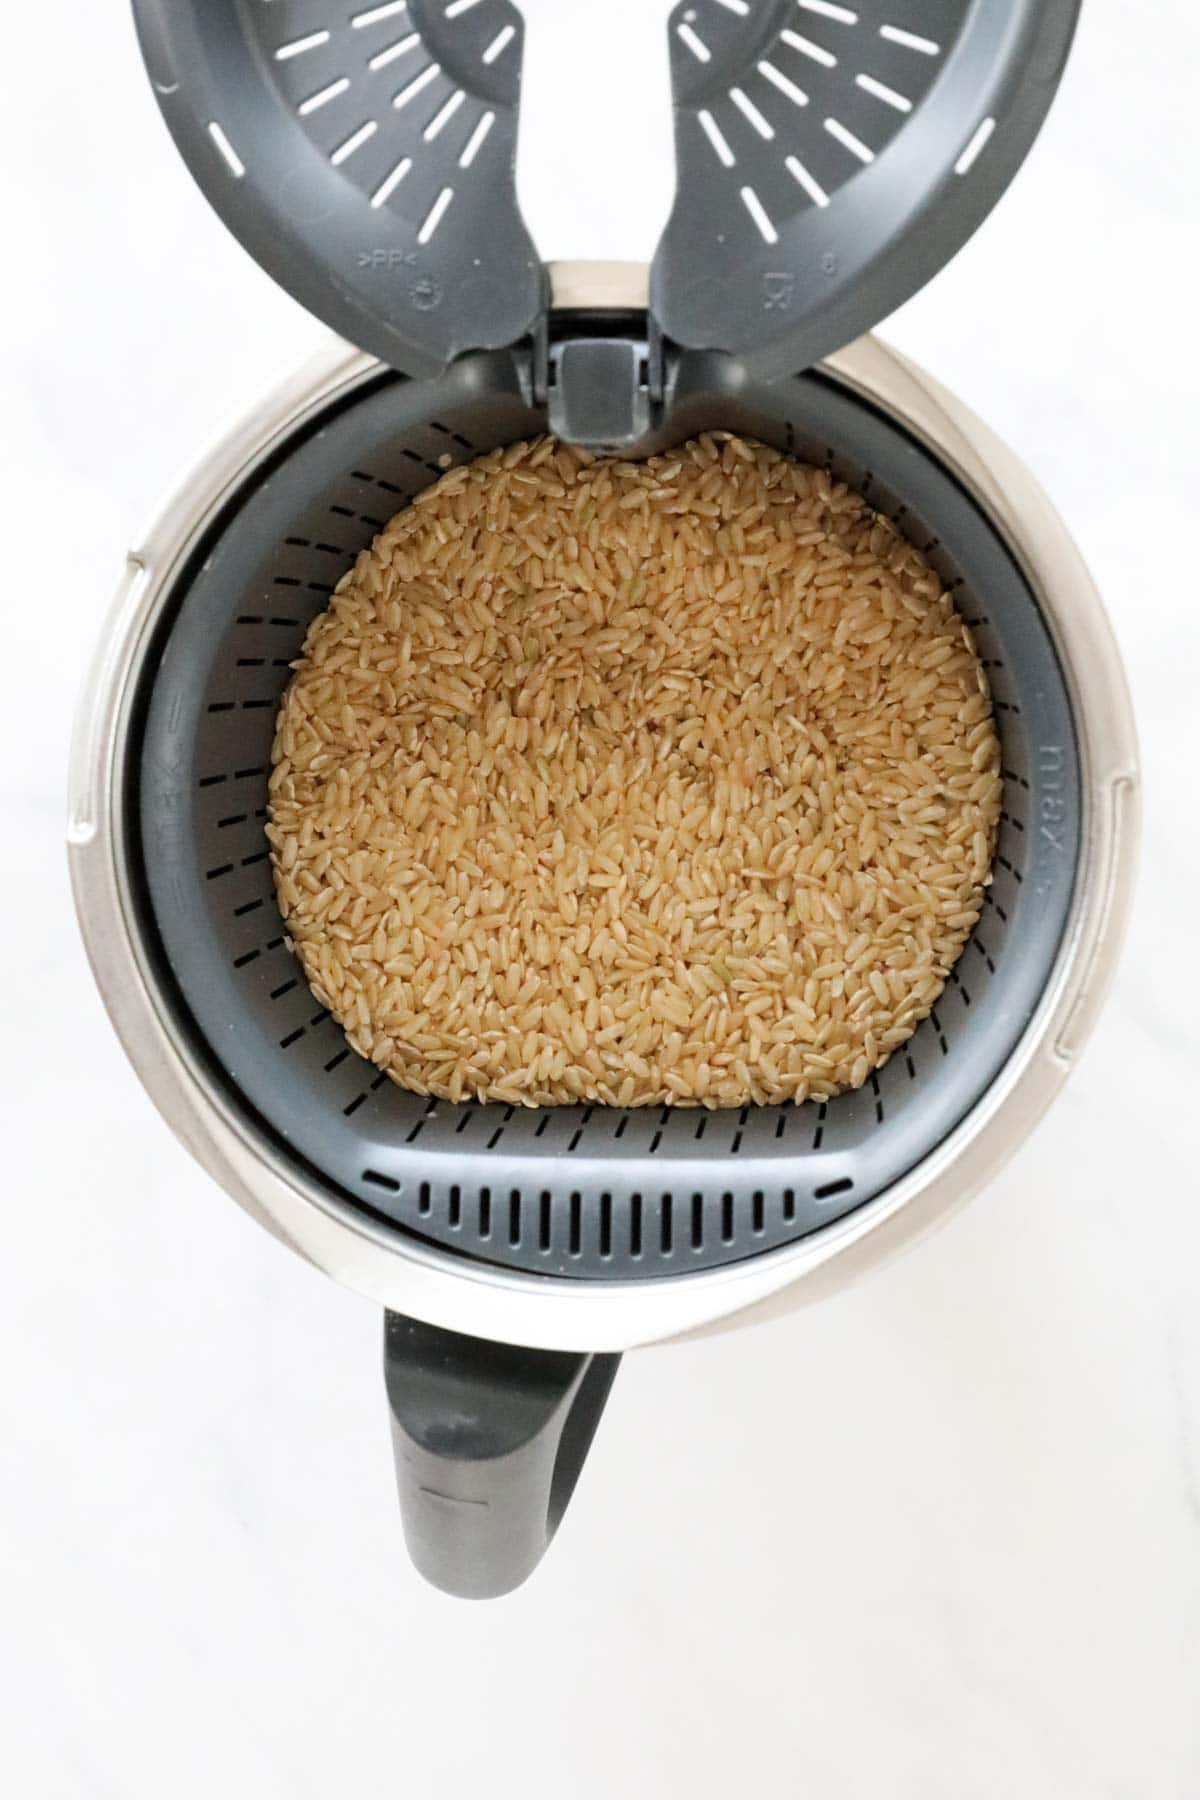 Rinsed brown rice in a simmering basket.